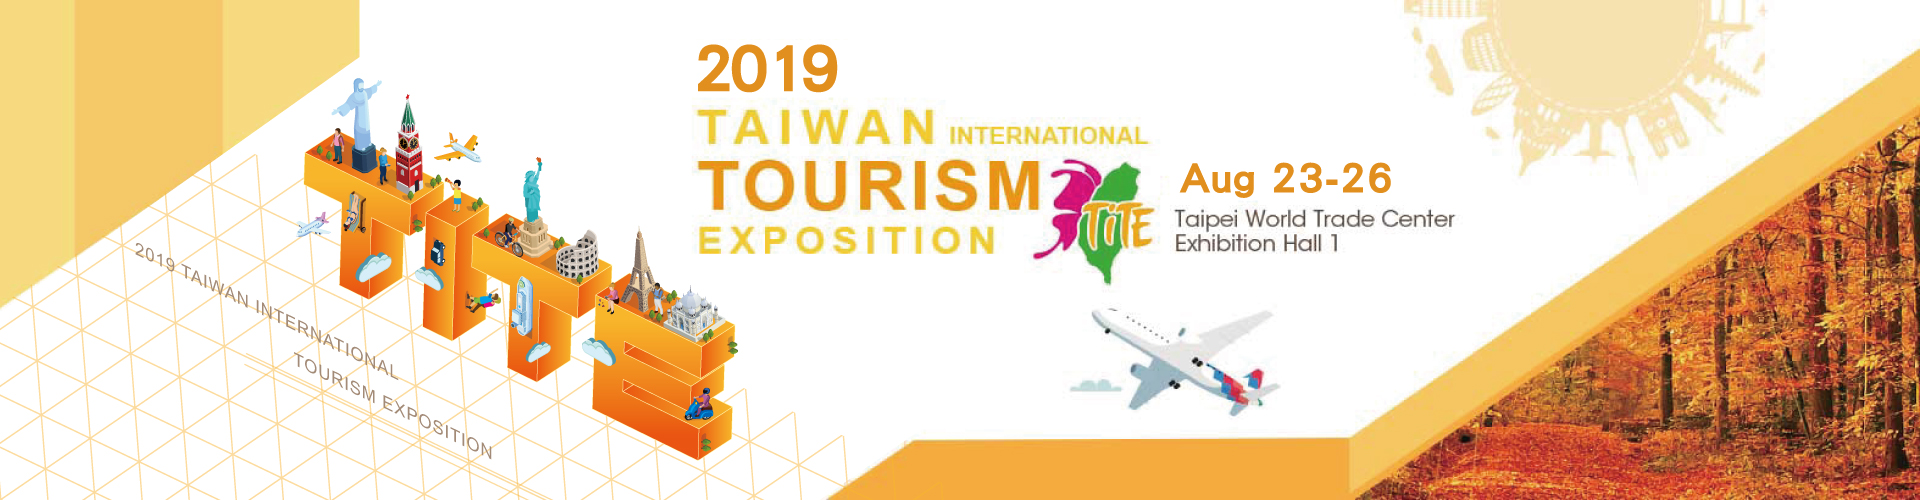 Taiwan International Tourism Exposition (TITE)